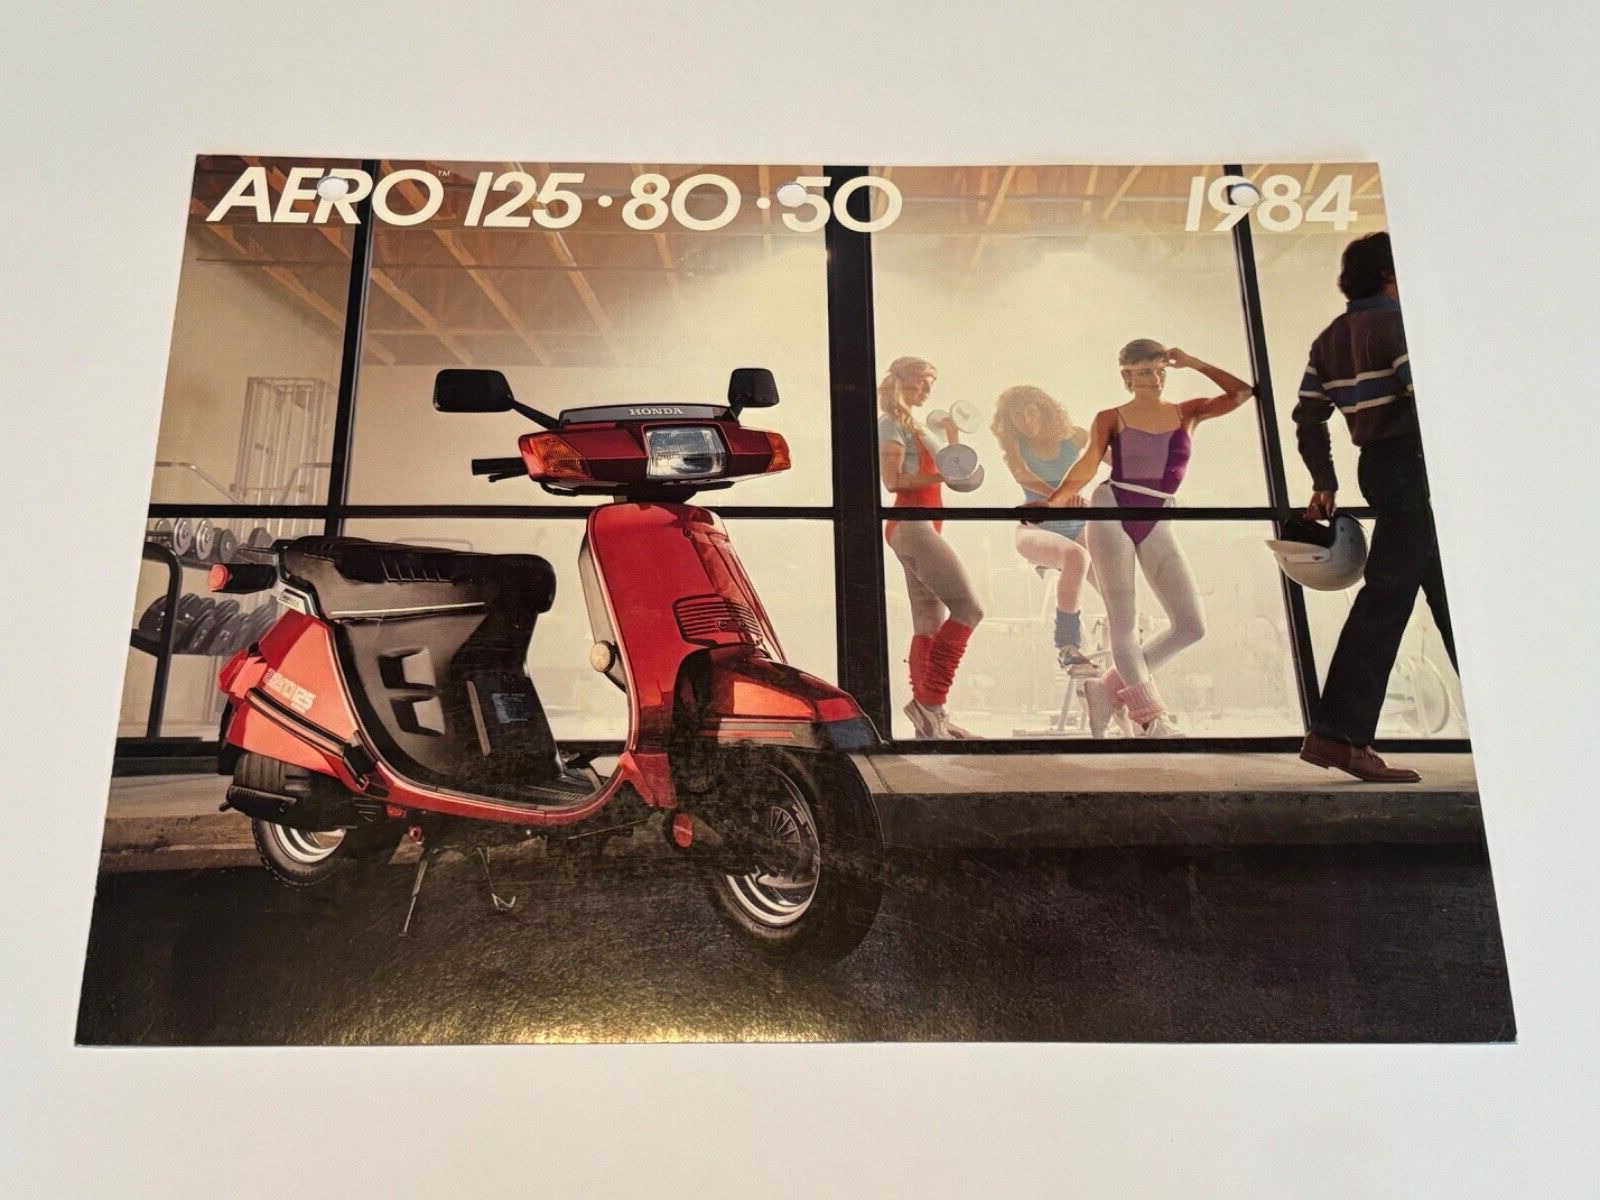 Original 1984 Honda Aero 125-80-50 Scooters Dealer Sales Brochure